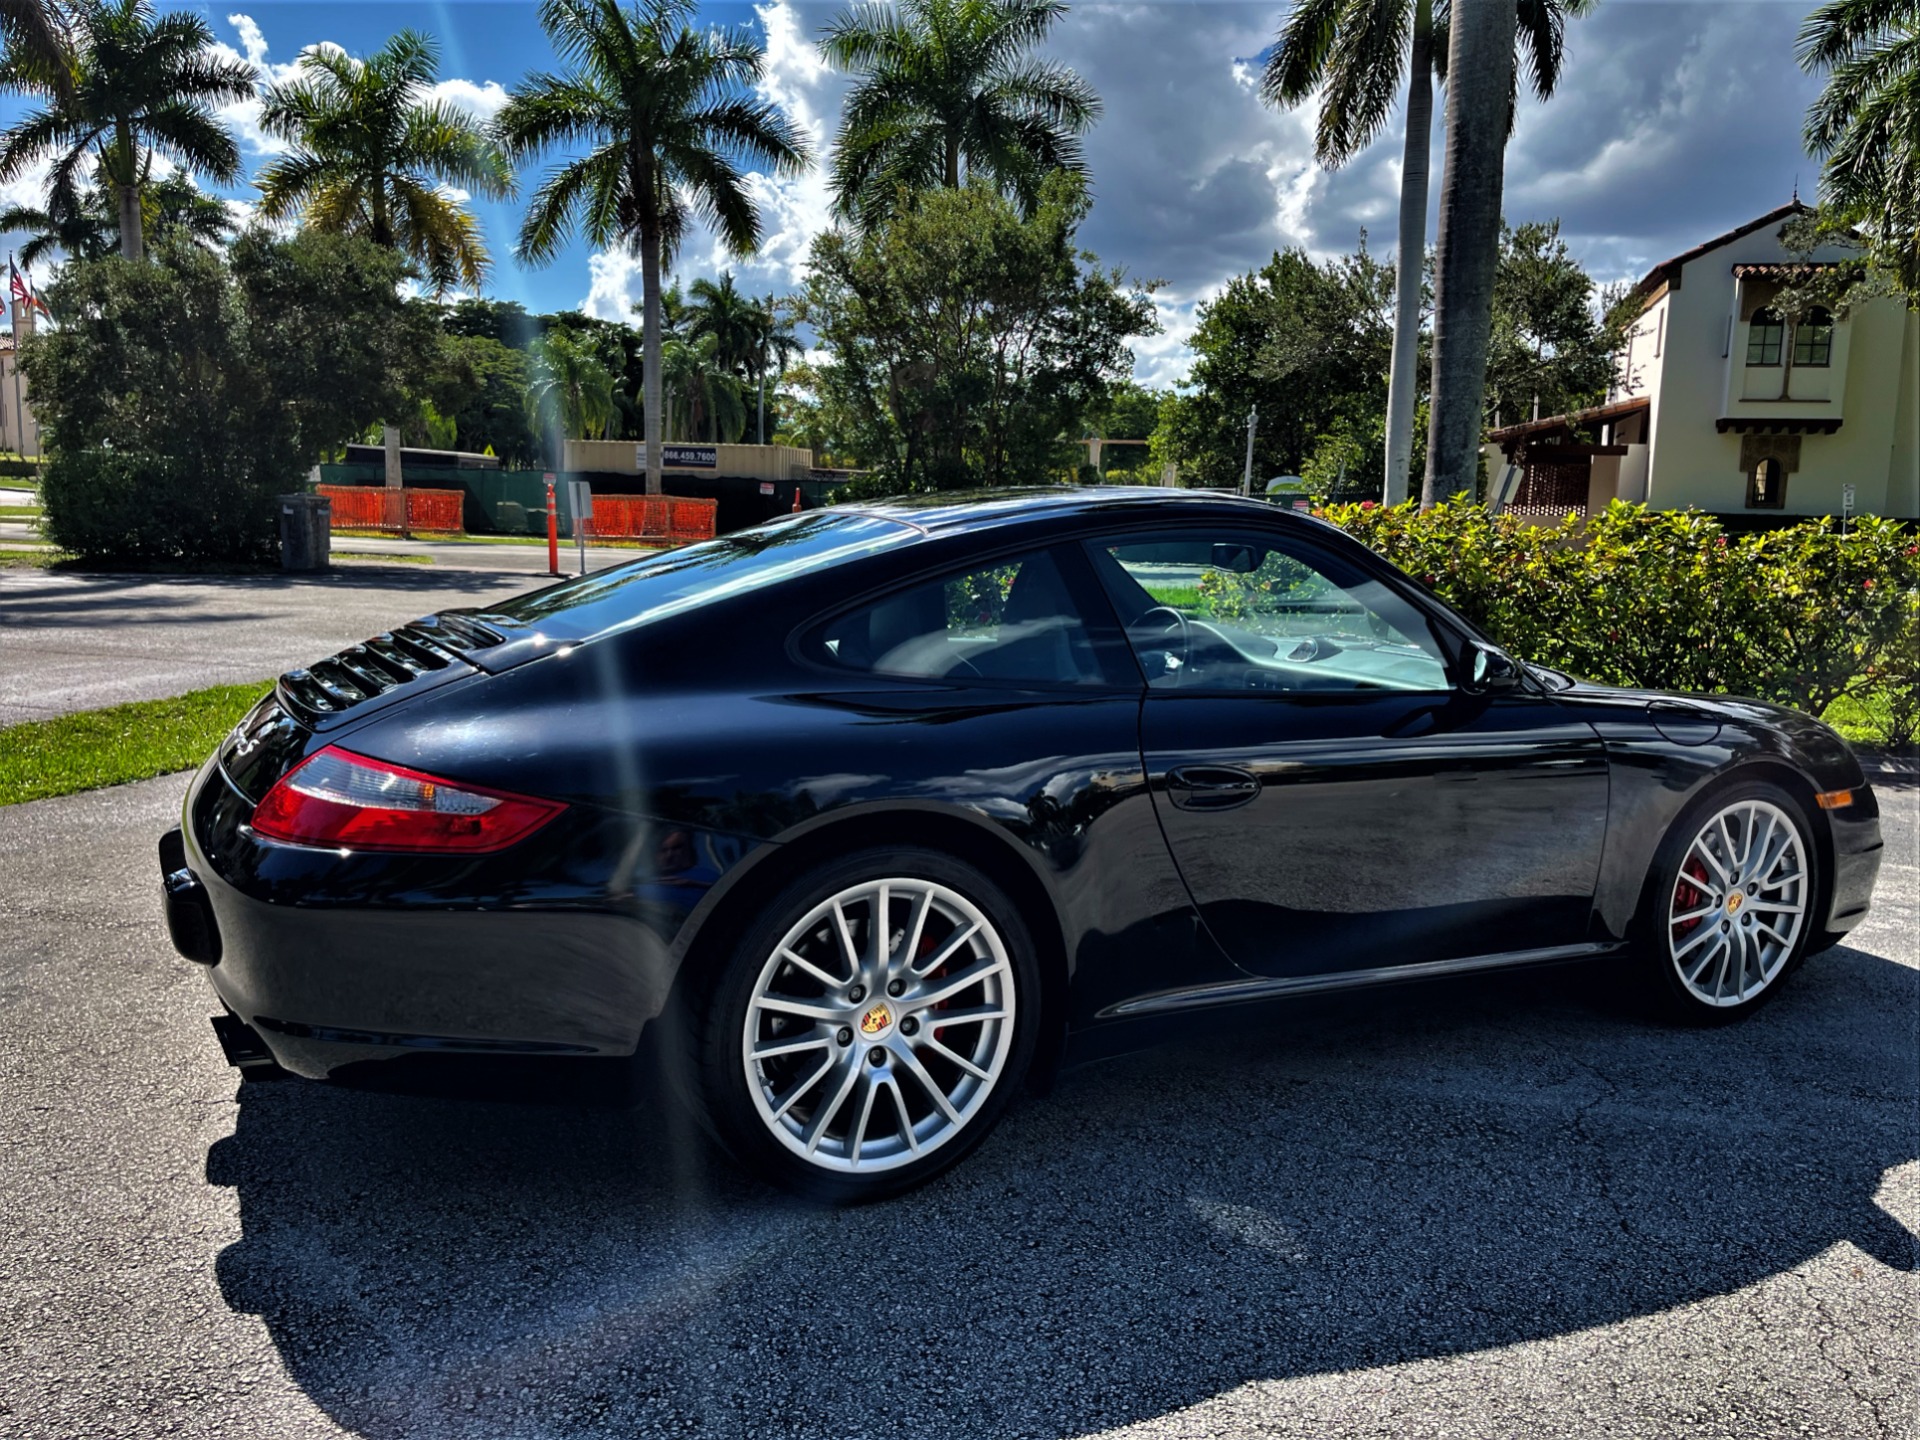 Used 2007 Porsche 911 Carrera S for sale $63,850 at The Gables Sports Cars in Miami FL 33146 4